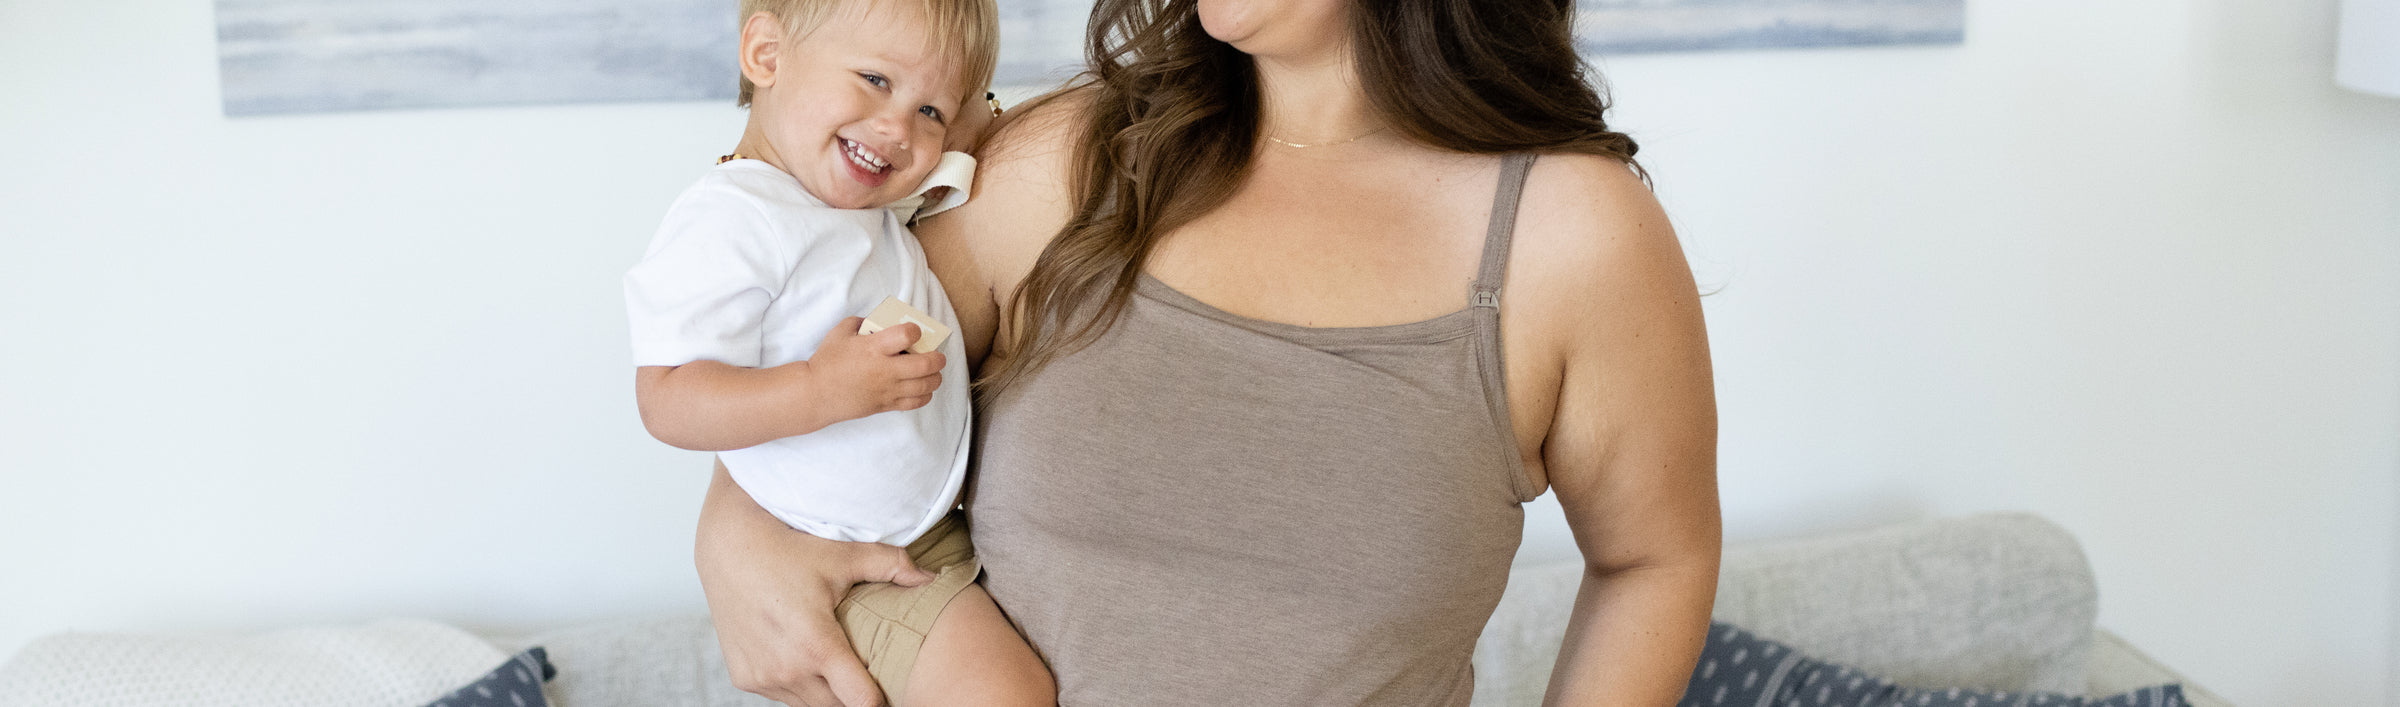 16 best nursing tops for breastfeeding moms -  Resources